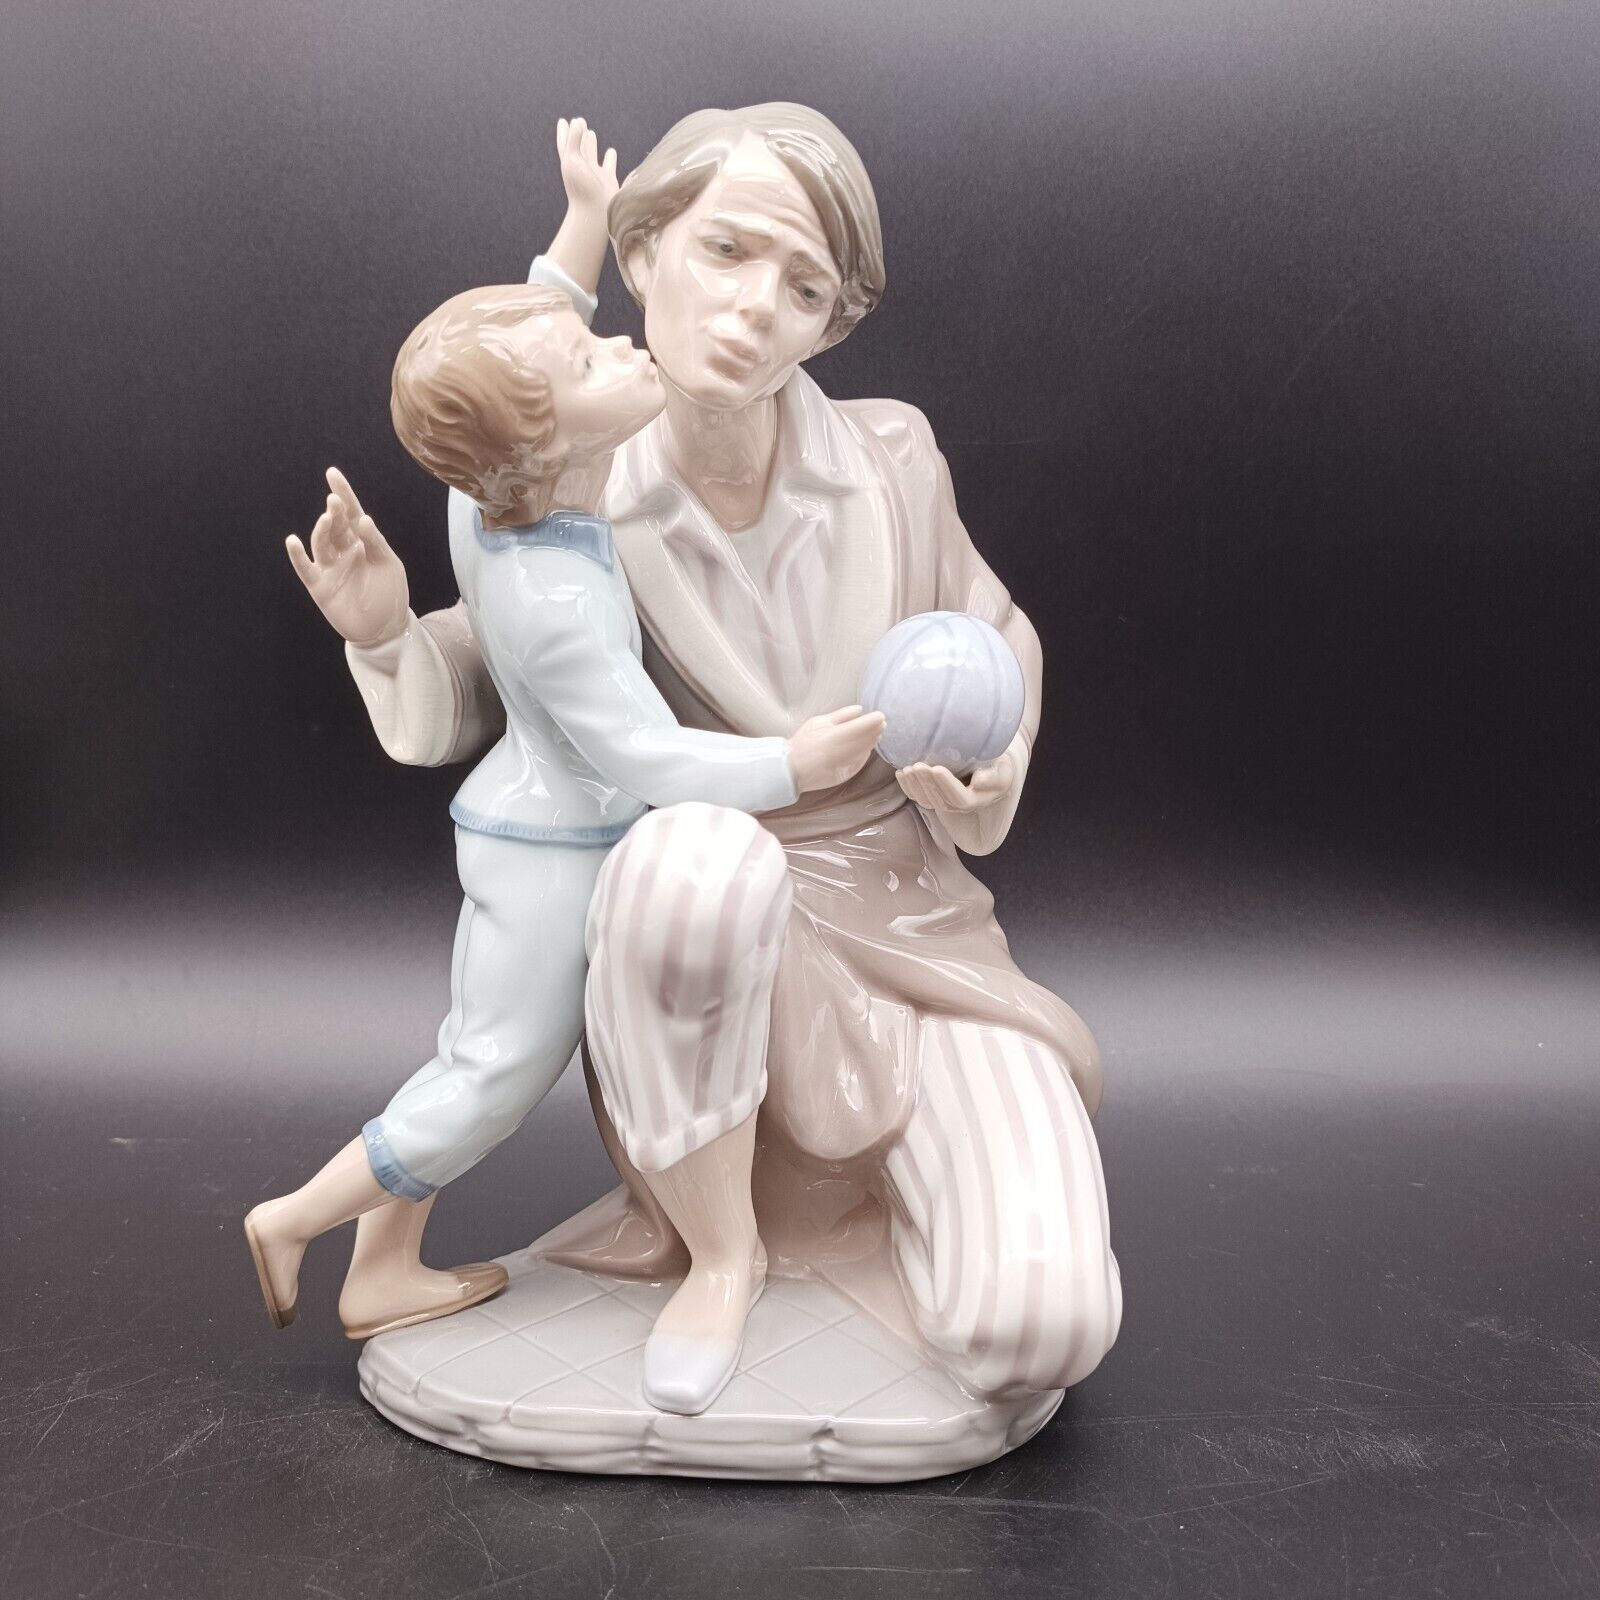 Rare 1990 Lladro Figurine “My Dad” 6001